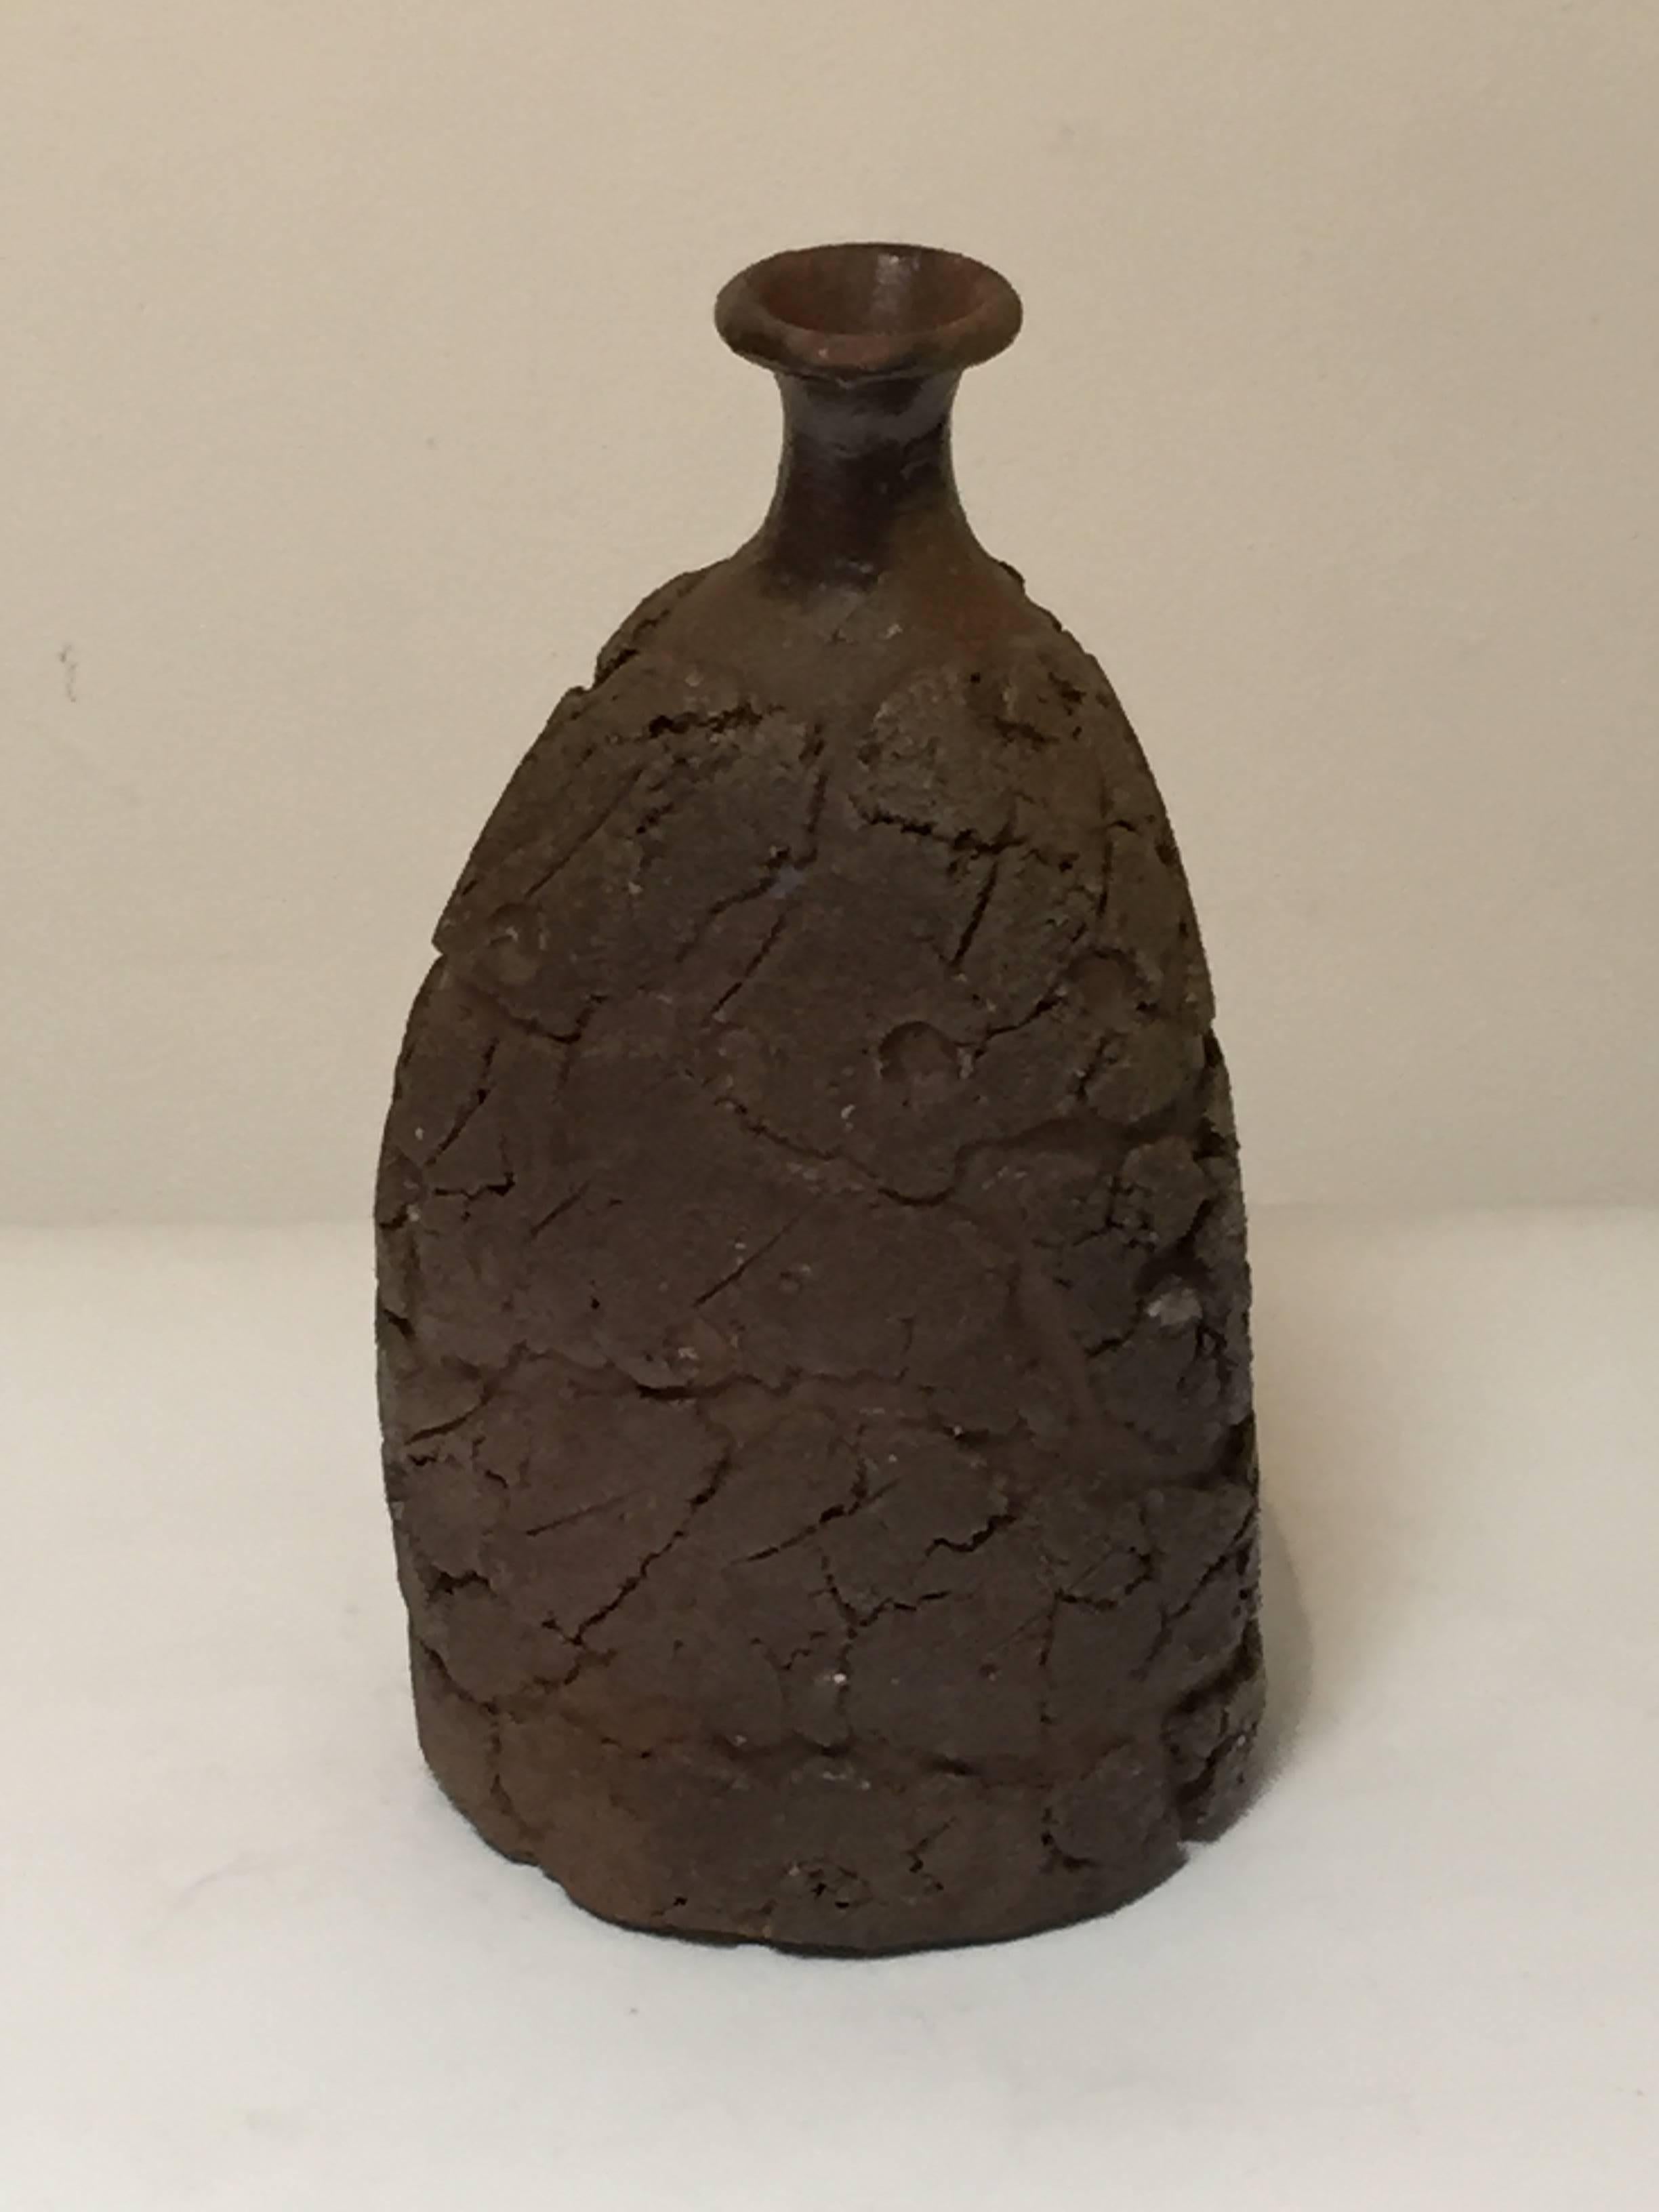 Japanese Contemporary Ceramic Textured Bottle Vase by Harada Shuroku